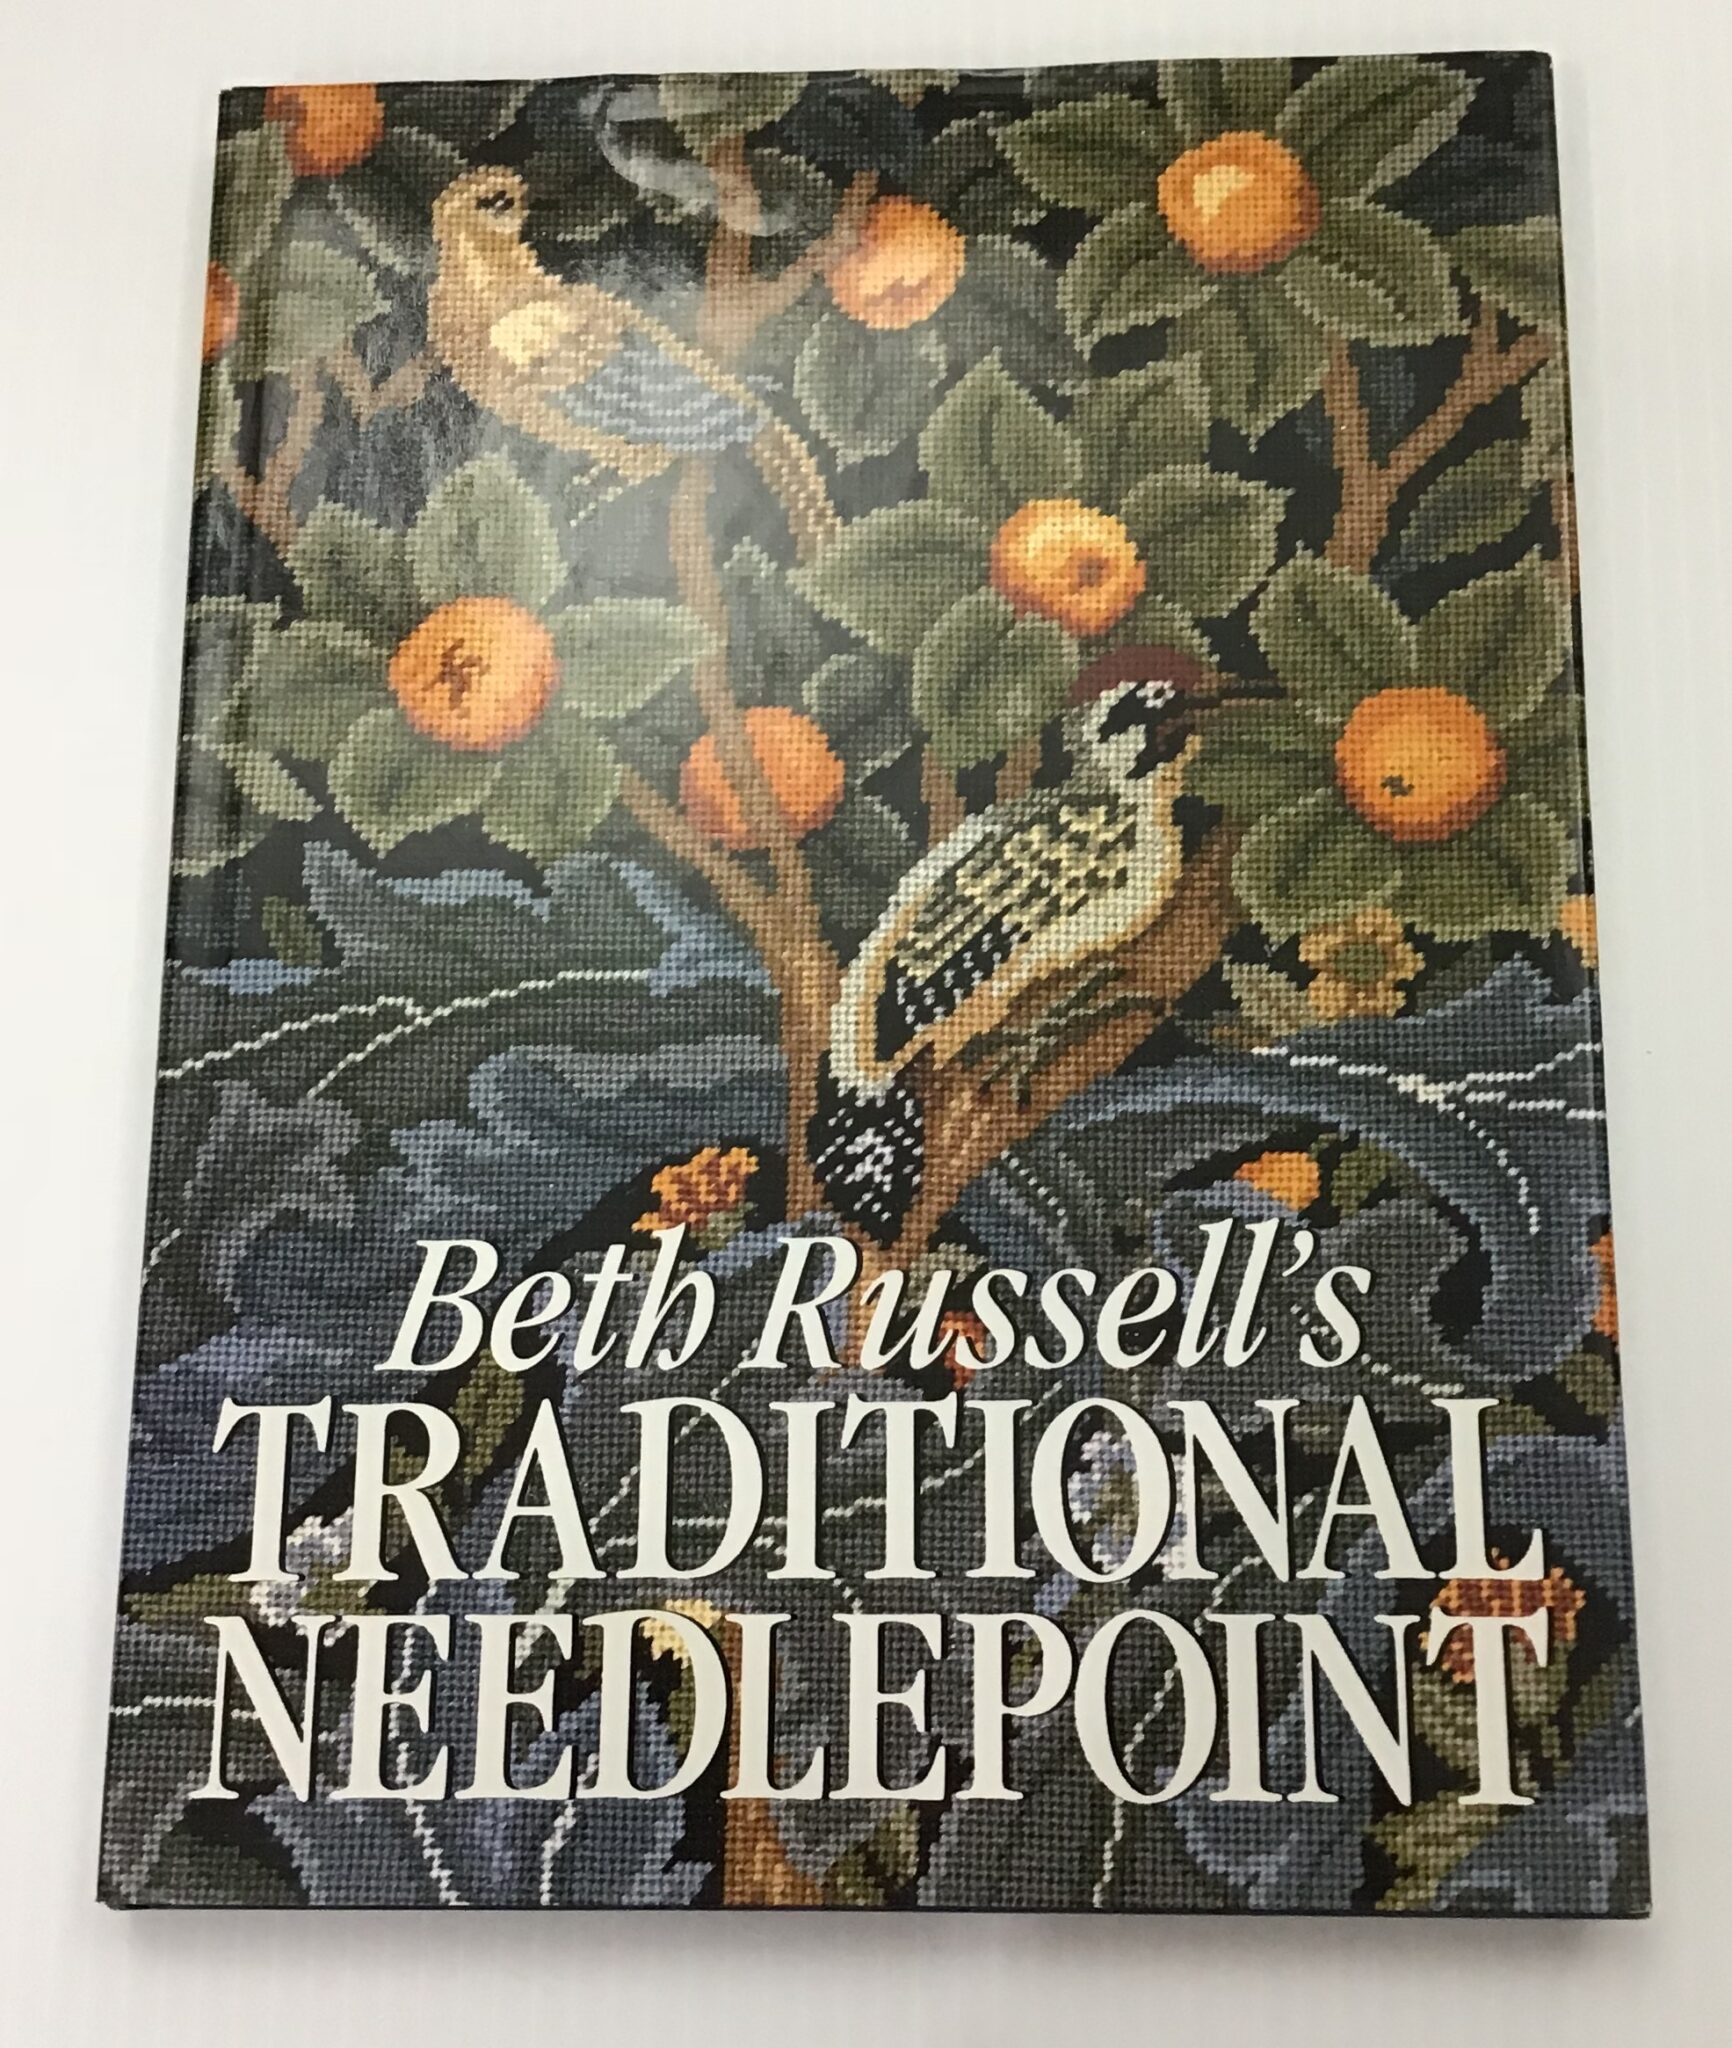 NEWEST! Needlepoint Notebook by Carolyn Hedge Bard - Nimble Needle